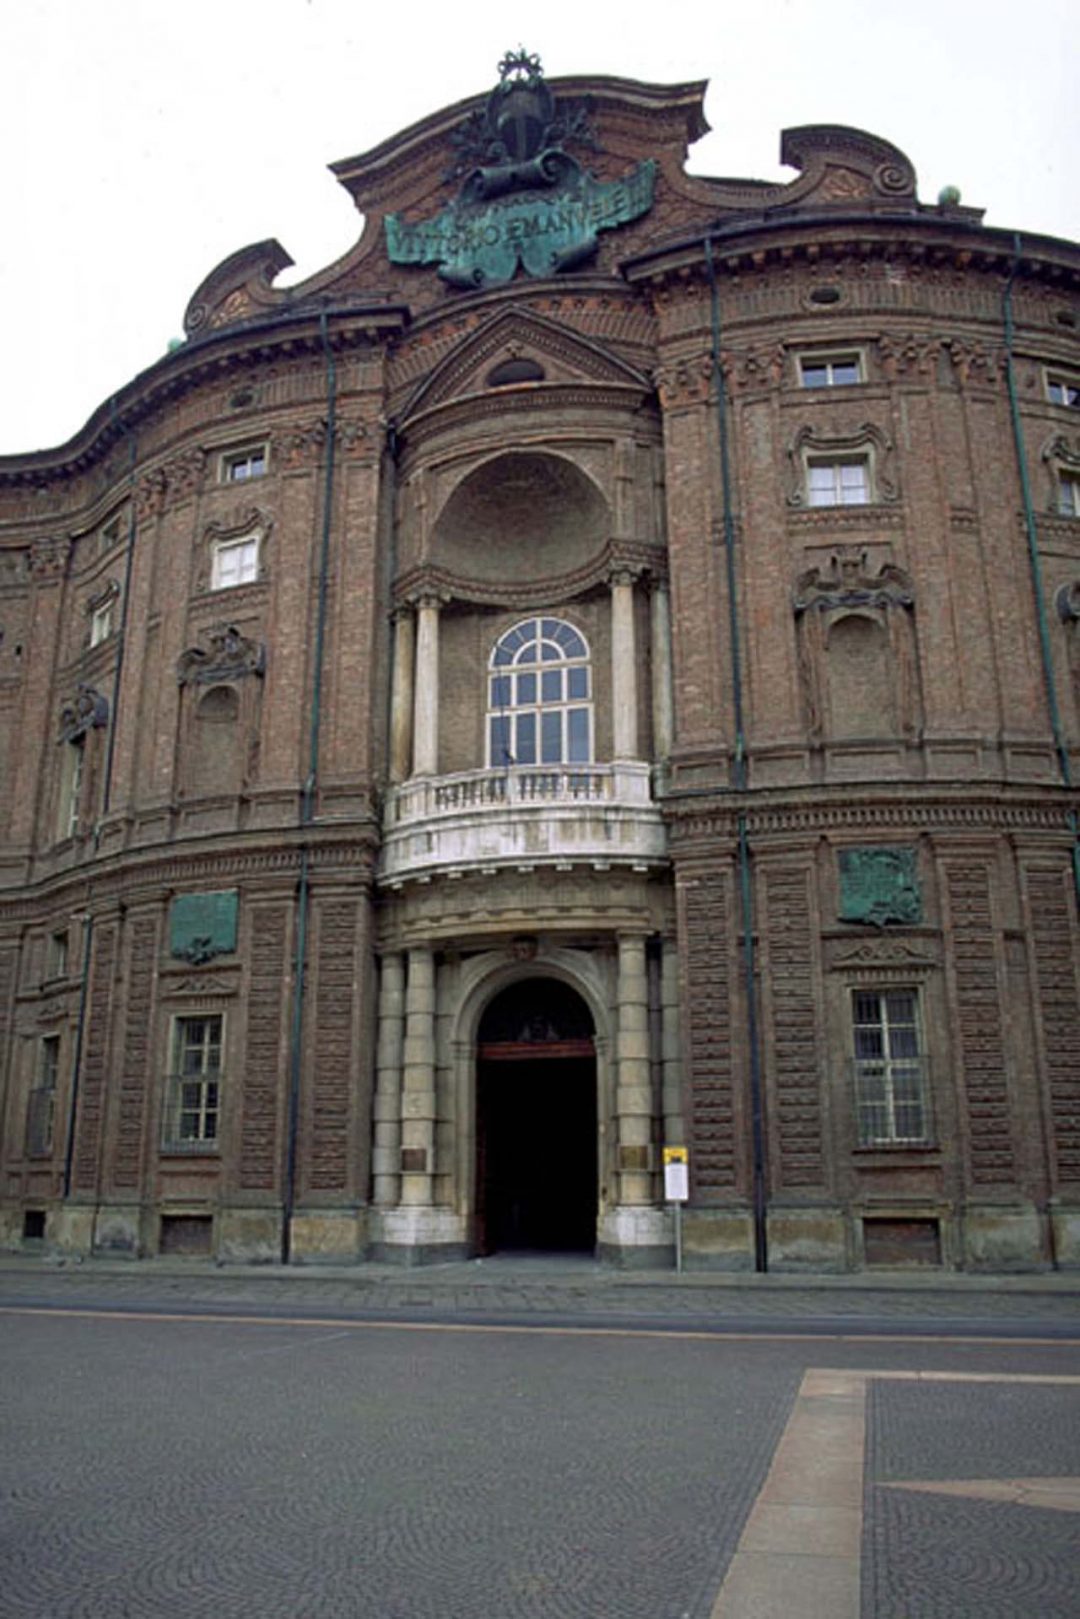 Palazzo Carignano, Torino